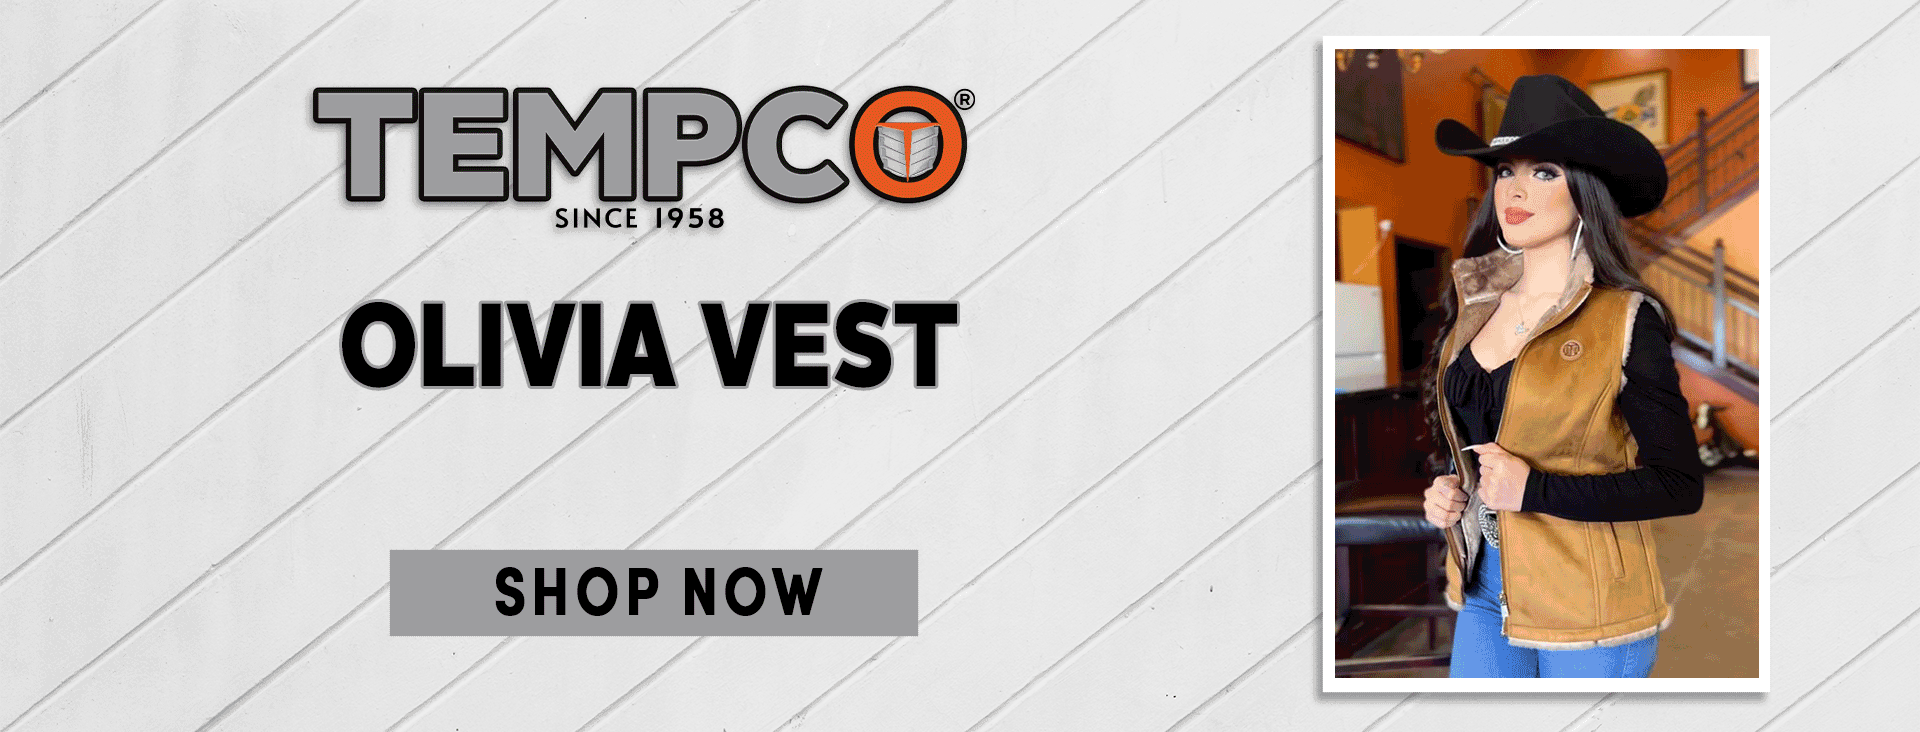 Tempco Olivia Vest - Shop Now